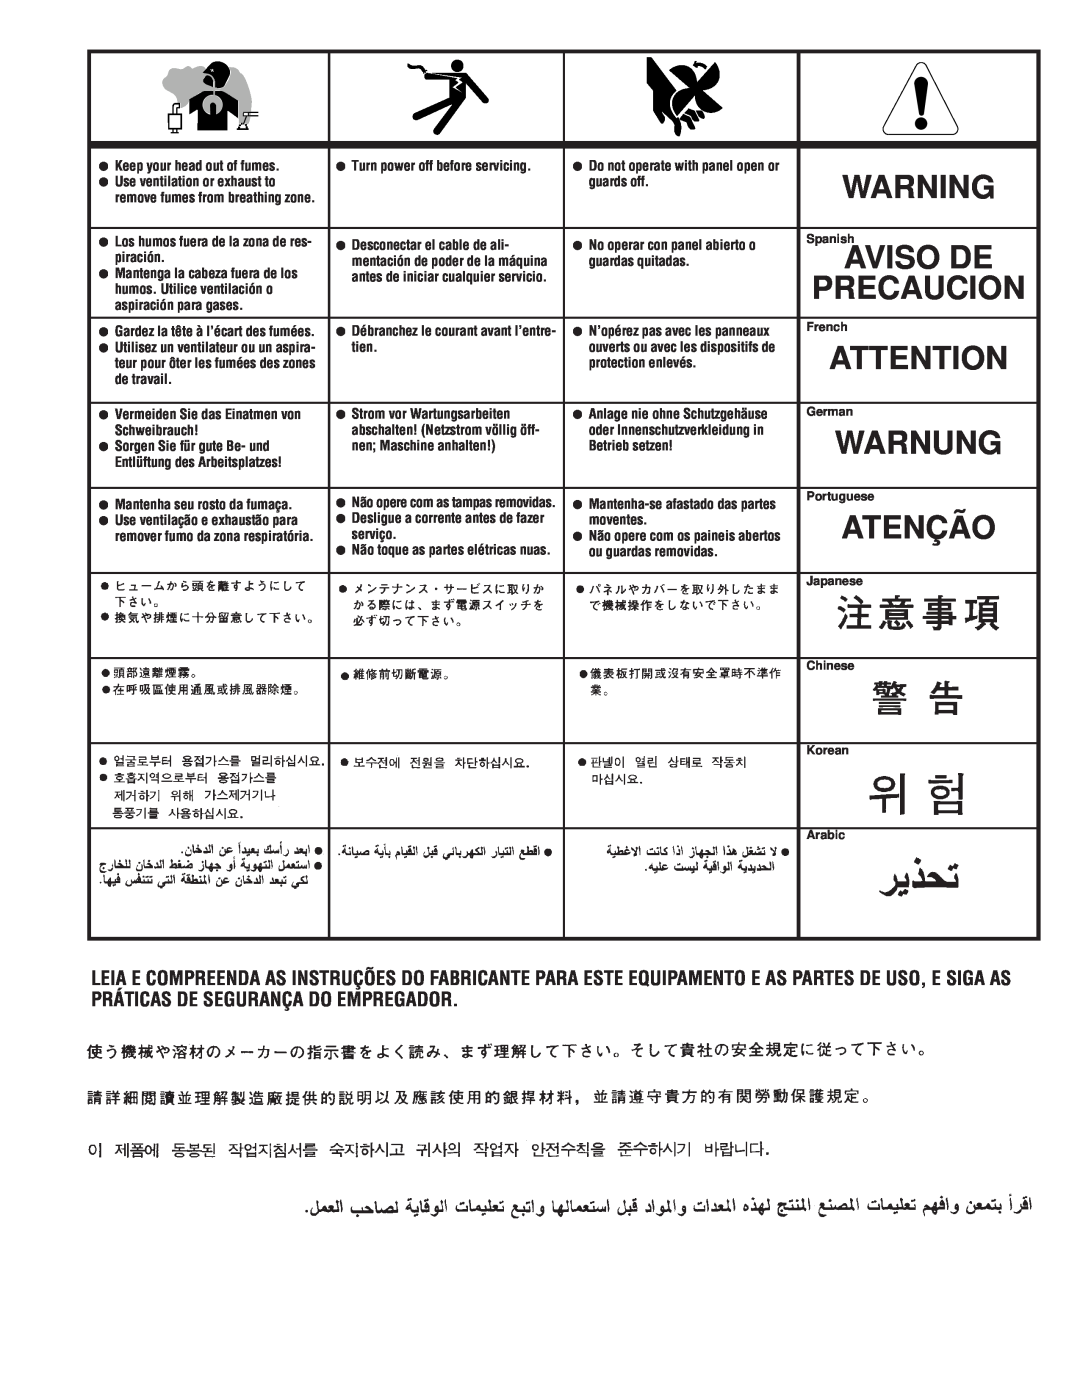 Lincoln Electric 4000 manual Warnung, Atenção, Precaucion, Aviso De, Keep your head out of fumes 